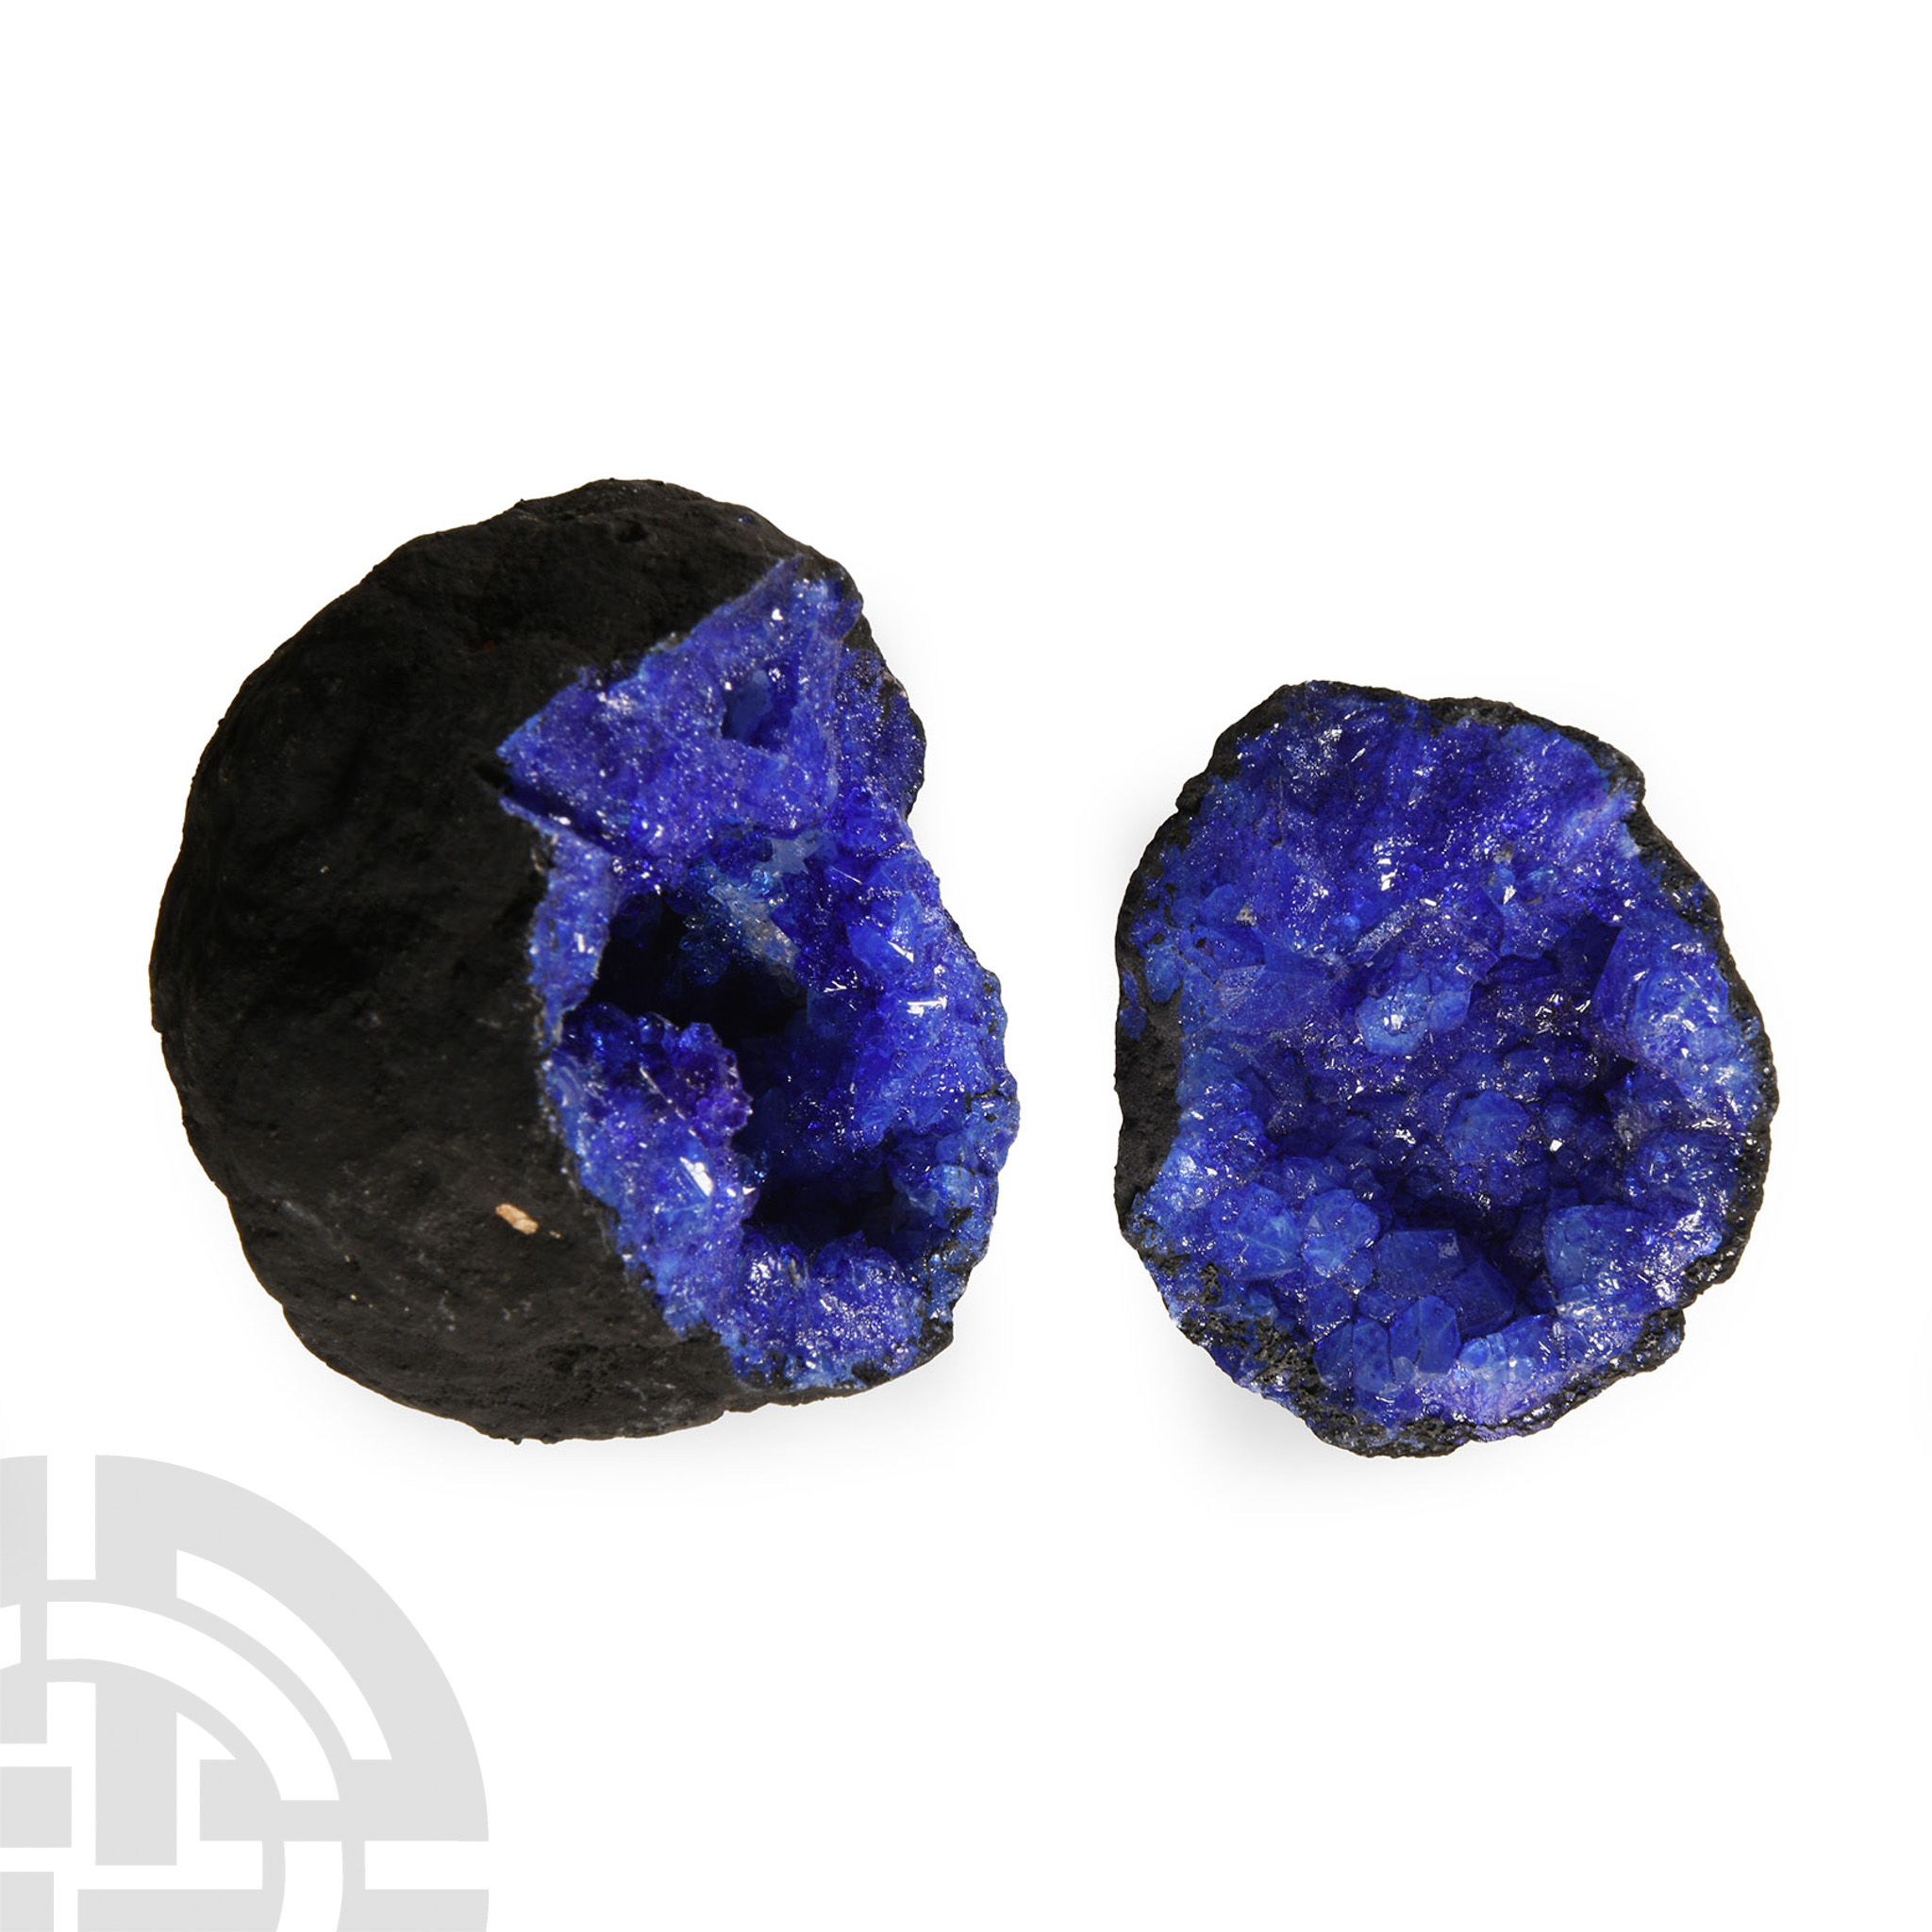 Natural History - Blue Quartz Crystal Nodule.